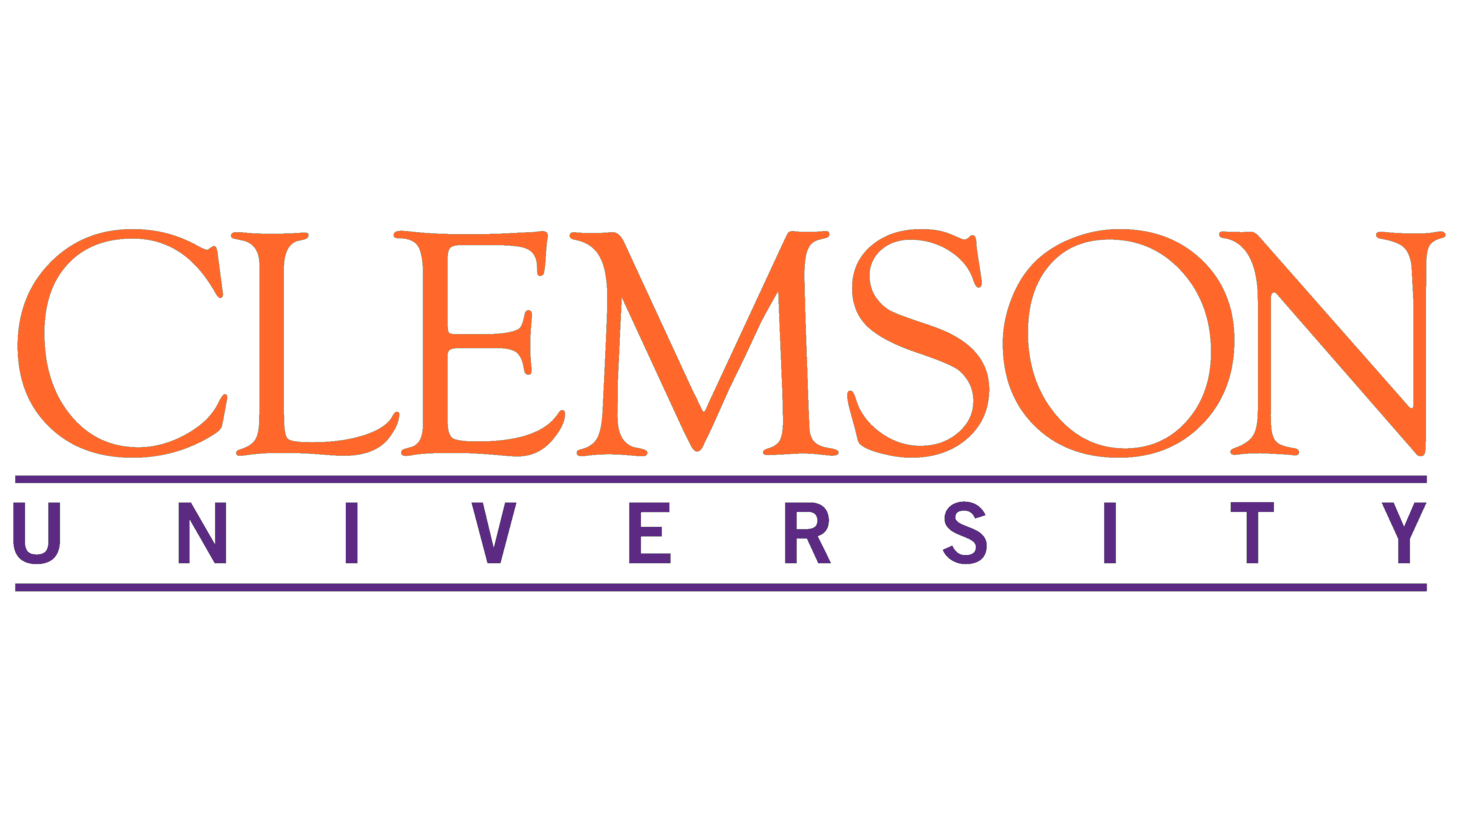 Clemson university sign